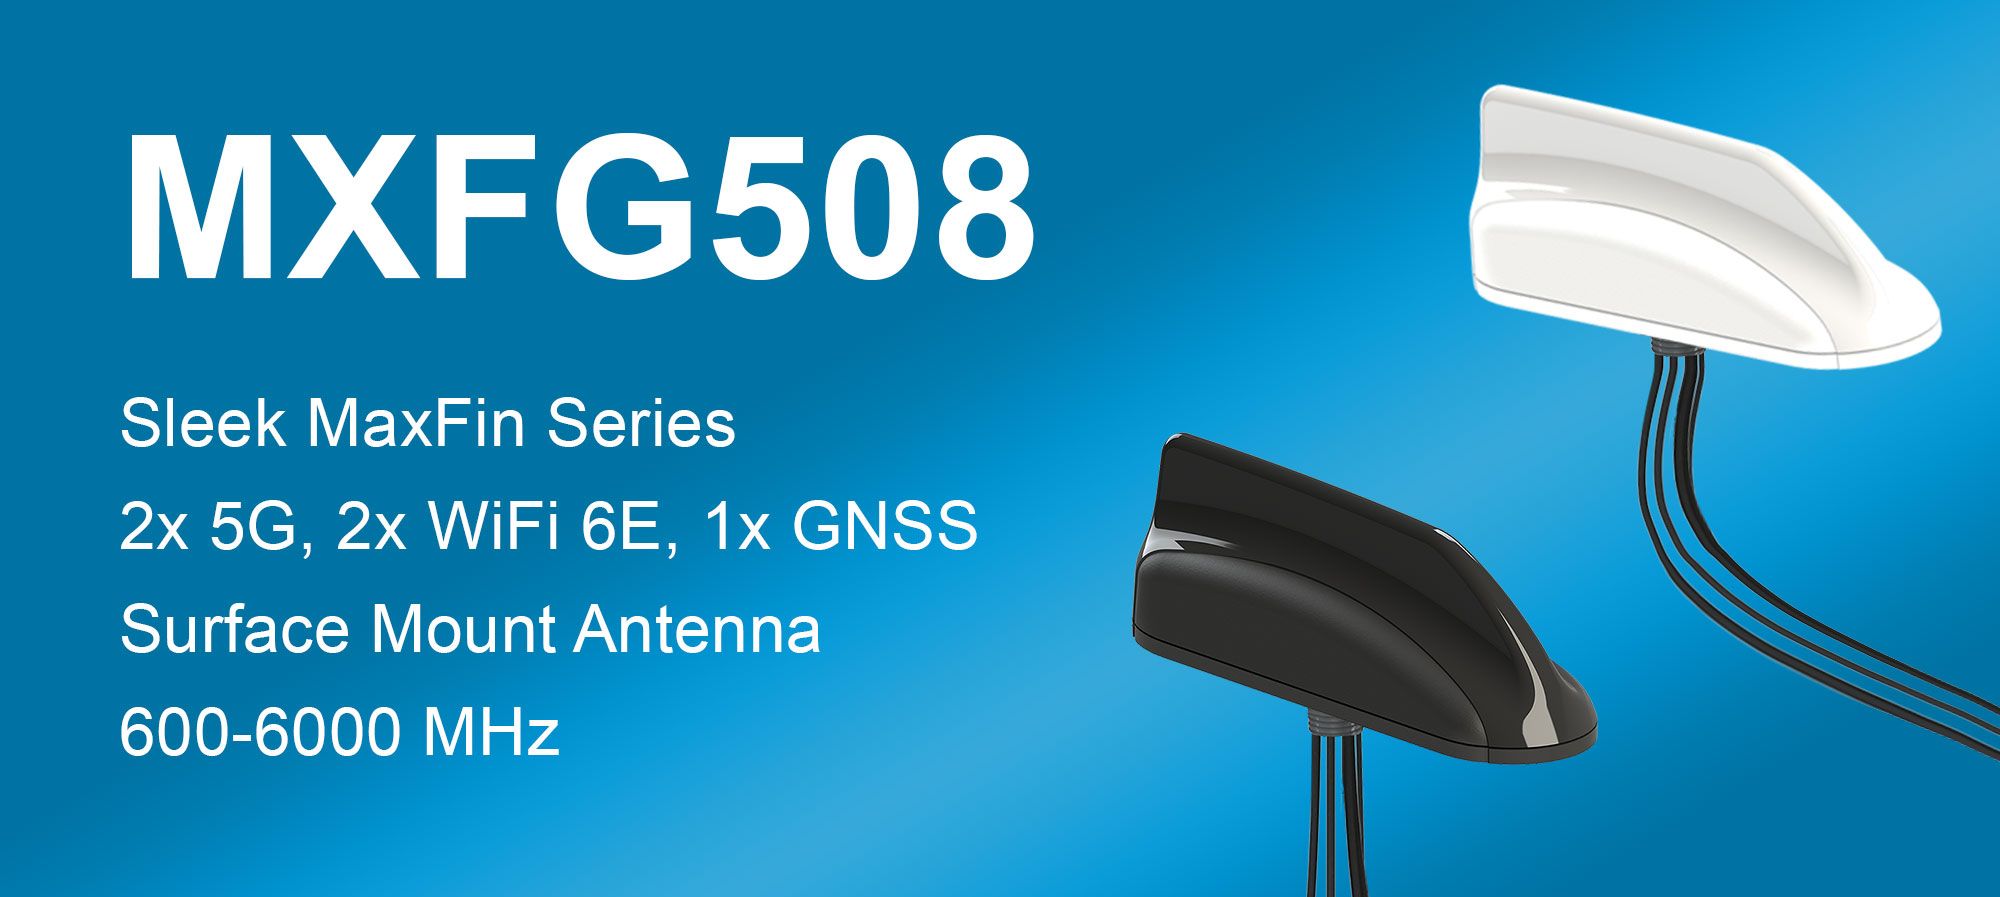 MXFG508 Antenna | Mobile Mark Antennas